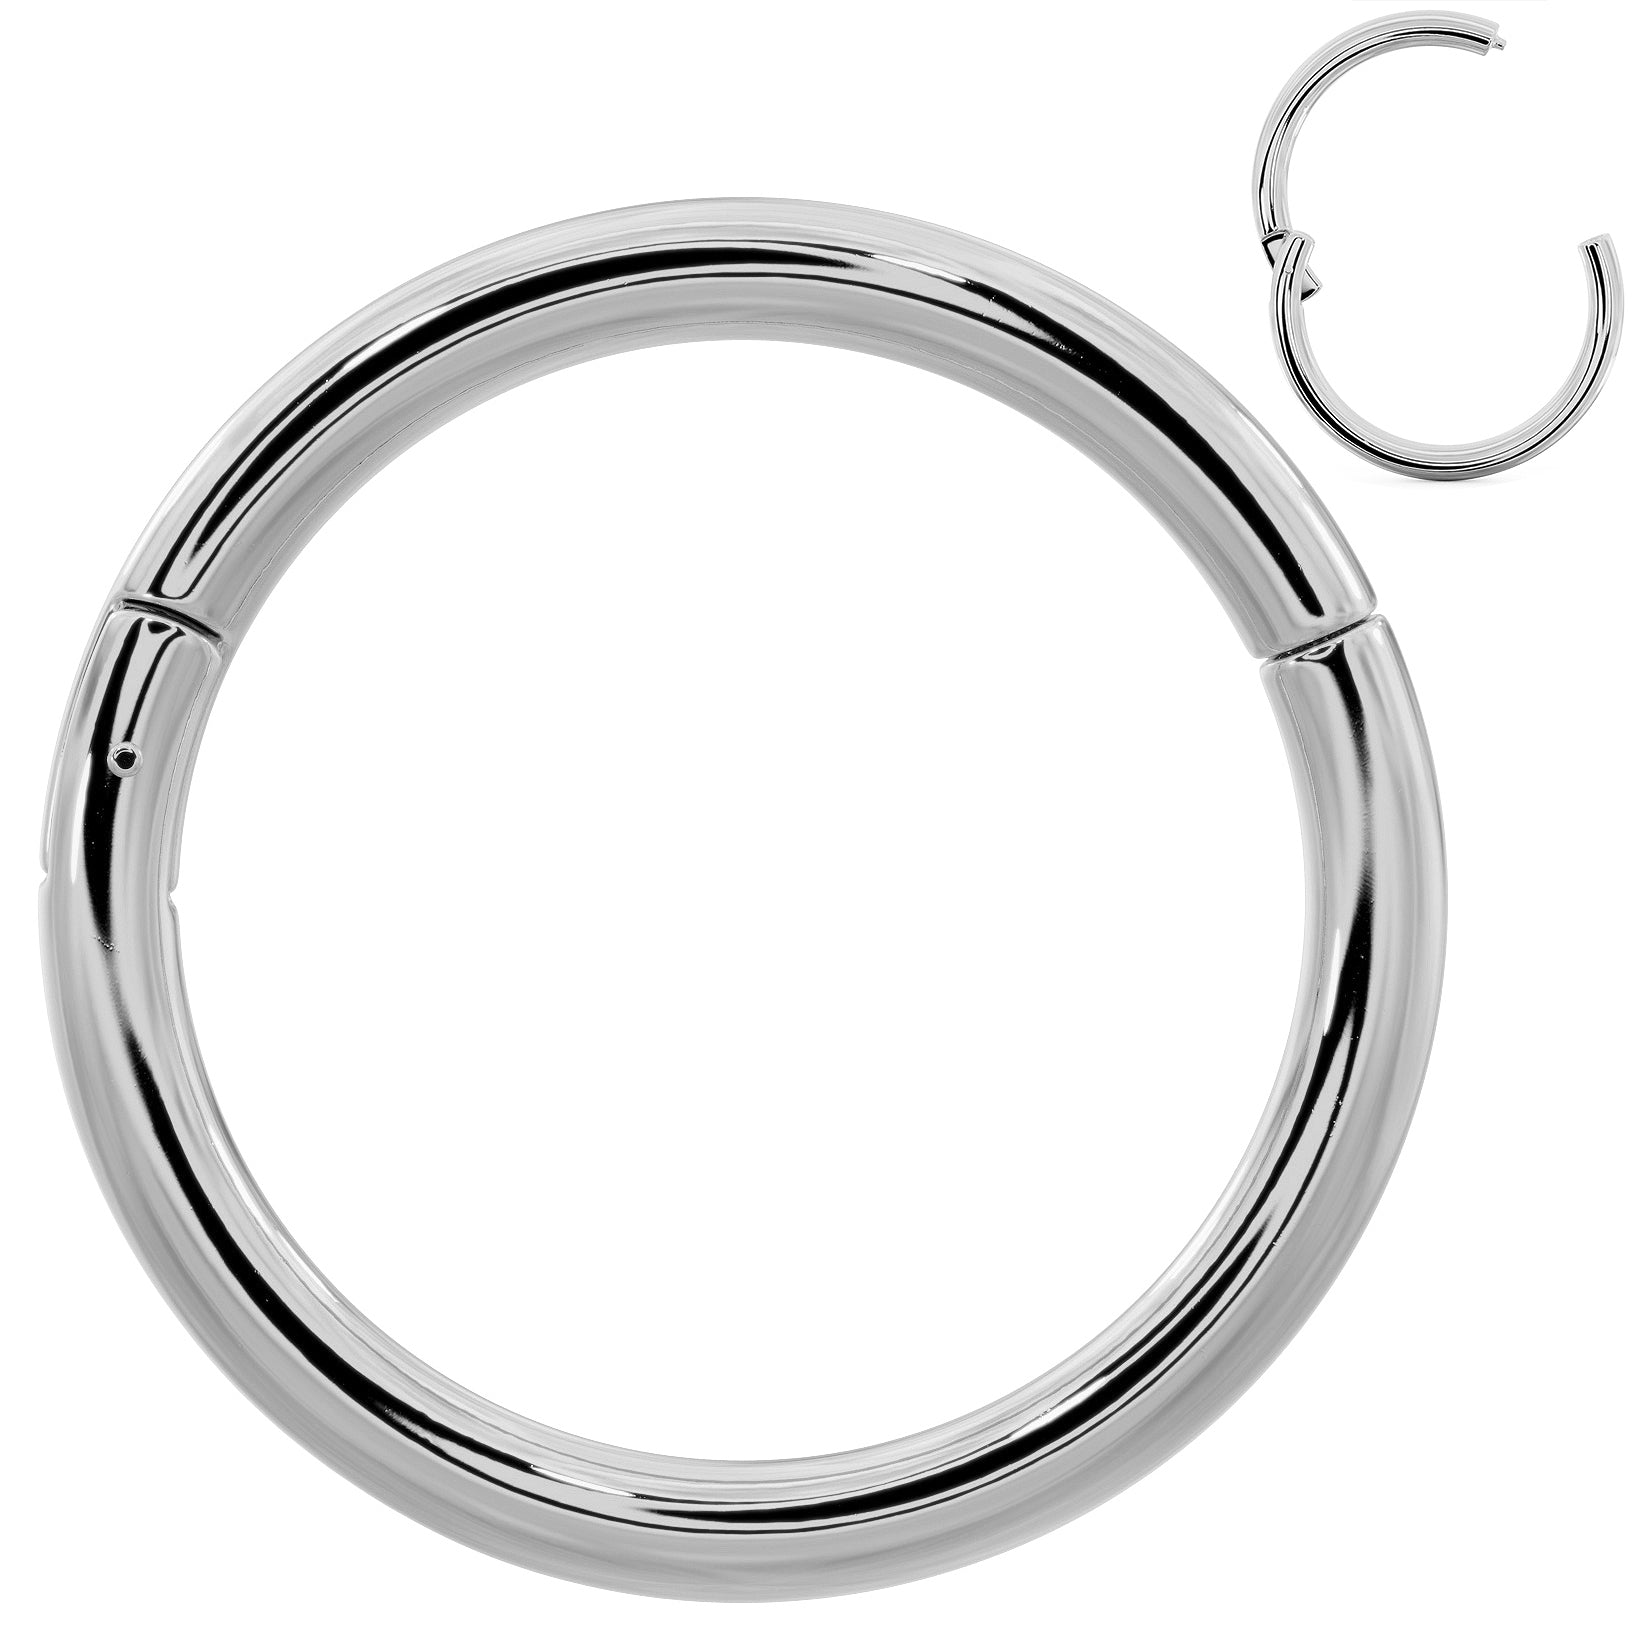 Basic nose ring made of pure titanium - Nickelfree